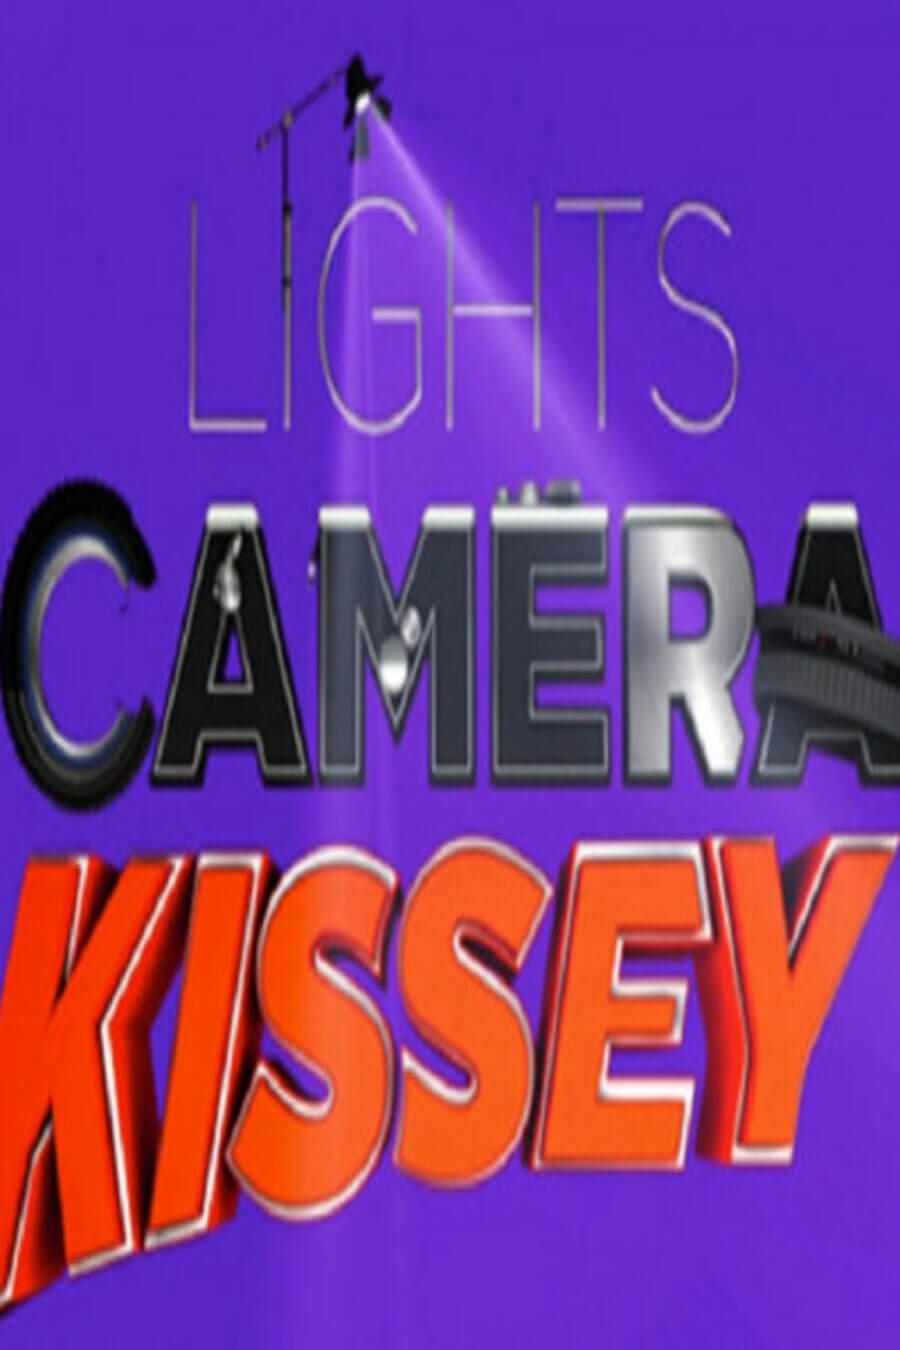 TV ratings for Lights Camera Kissey in France. SonyLIV TV series